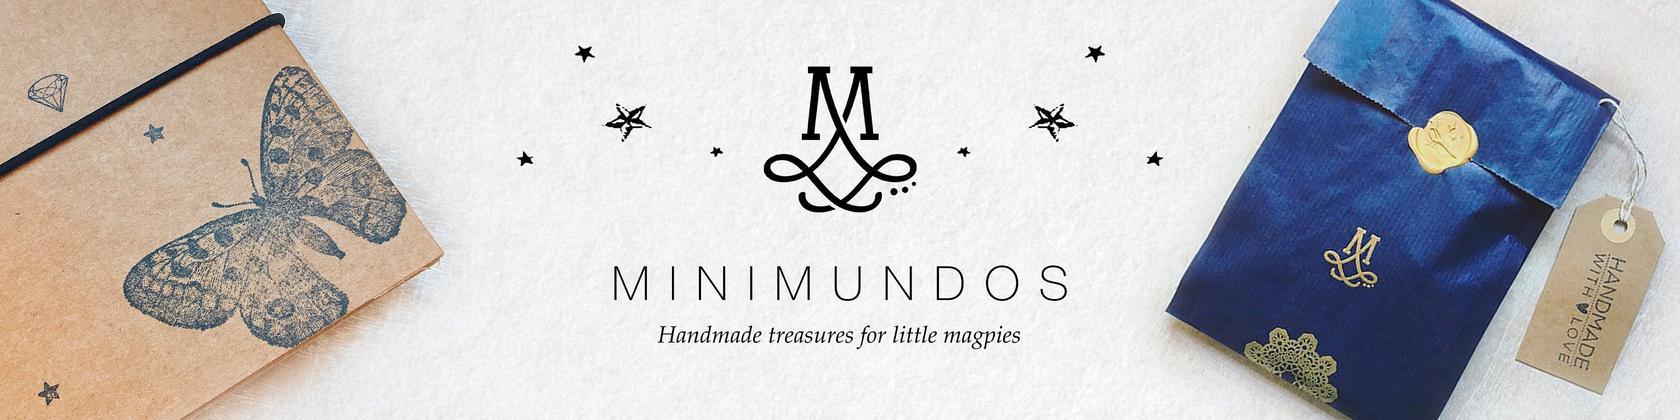 Minimudos Logo - Minimundos by minimundos on Etsy